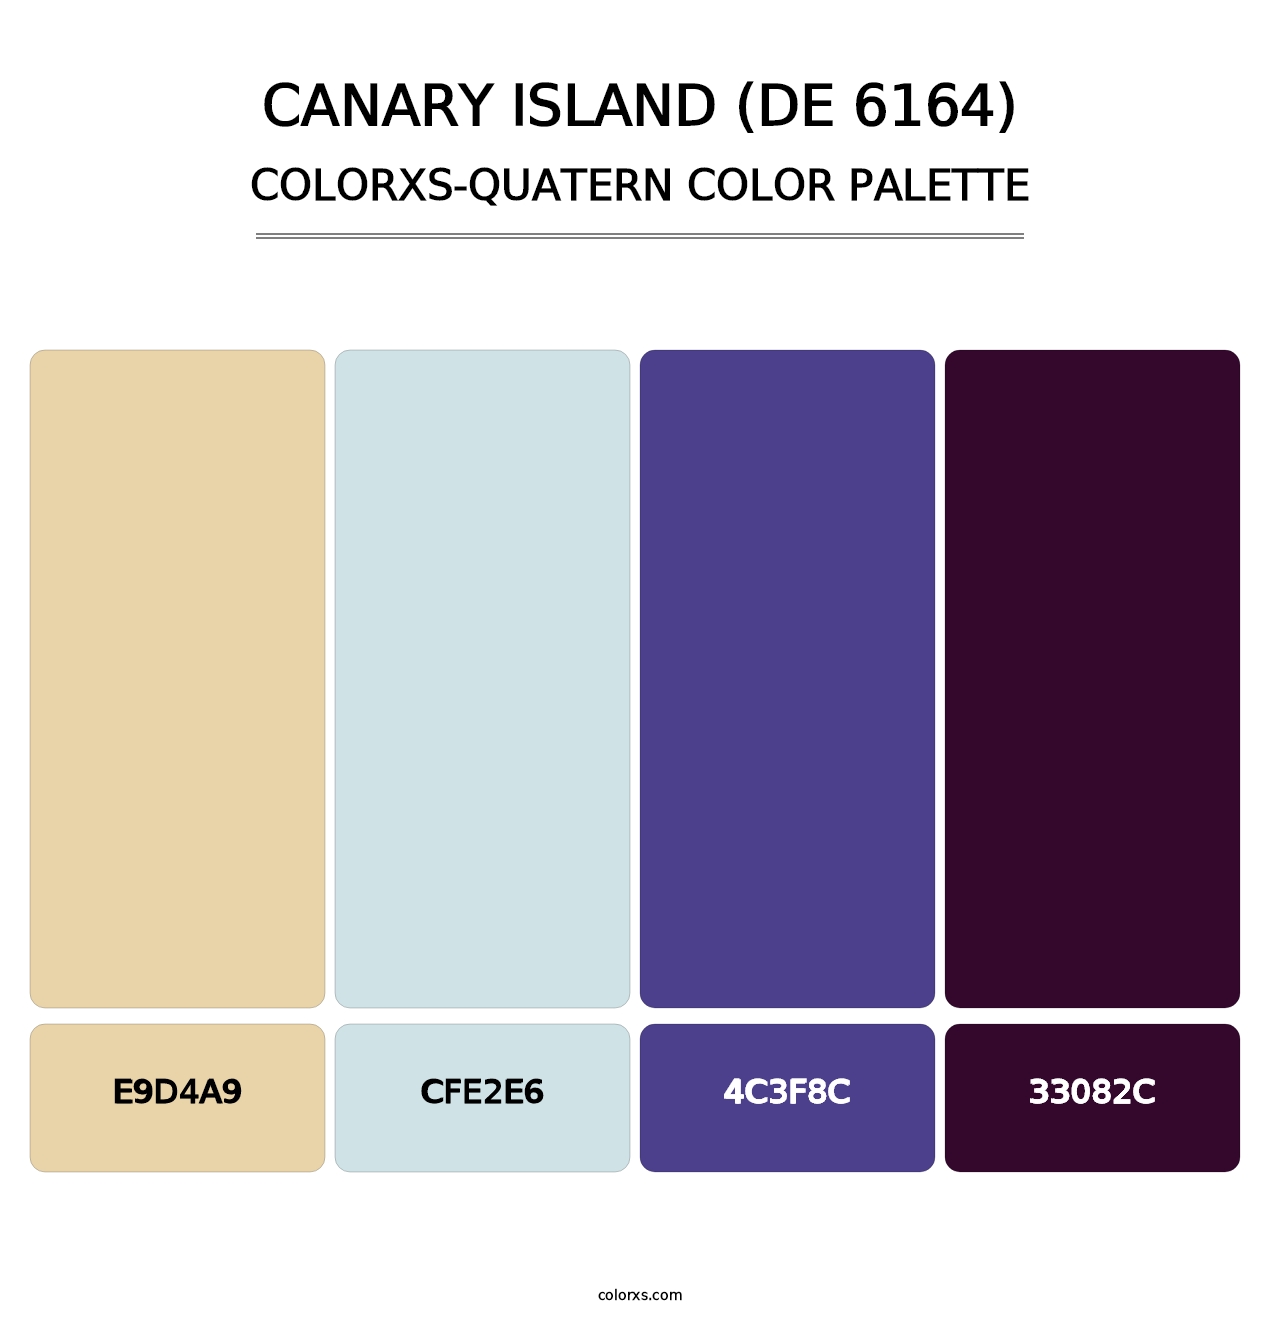 Canary Island (DE 6164) - Colorxs Quatern Palette